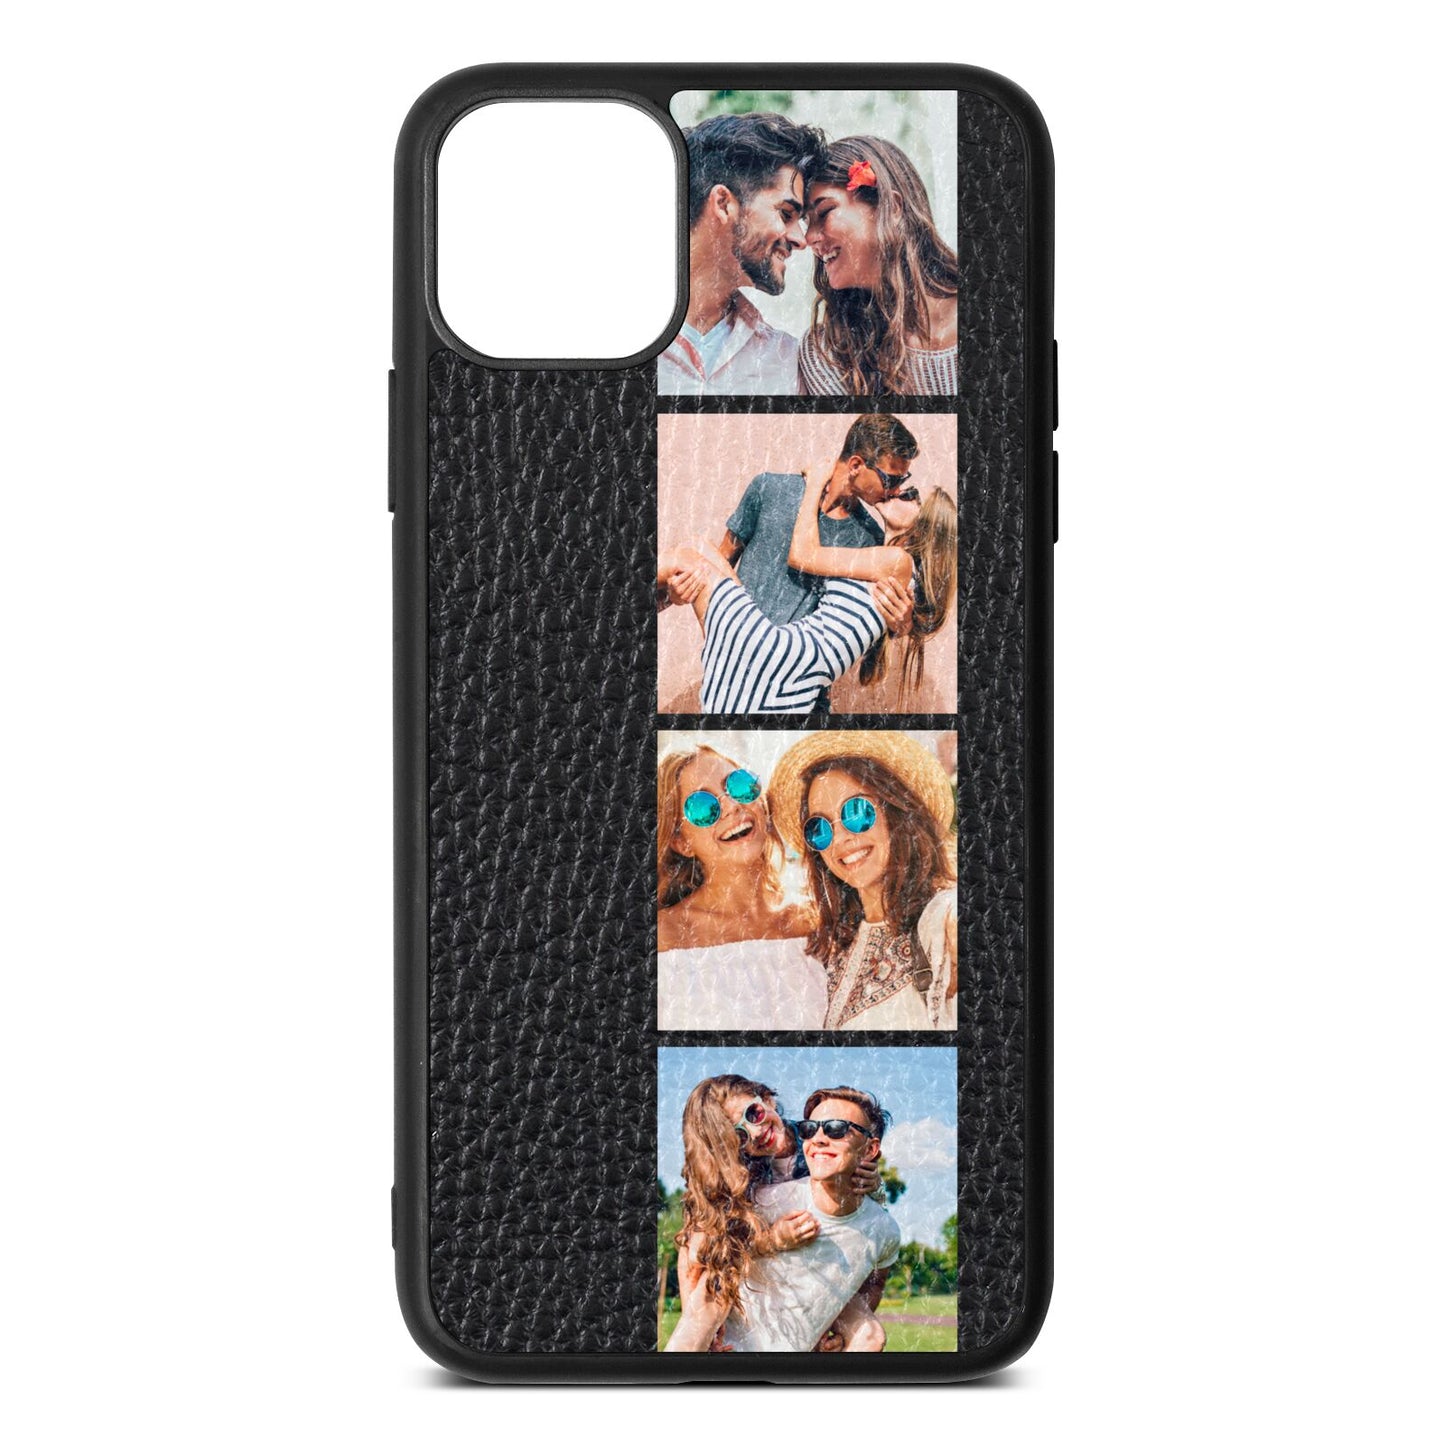 Photo Strip Montage Upload Black Pebble Leather iPhone 11 Pro Max Case